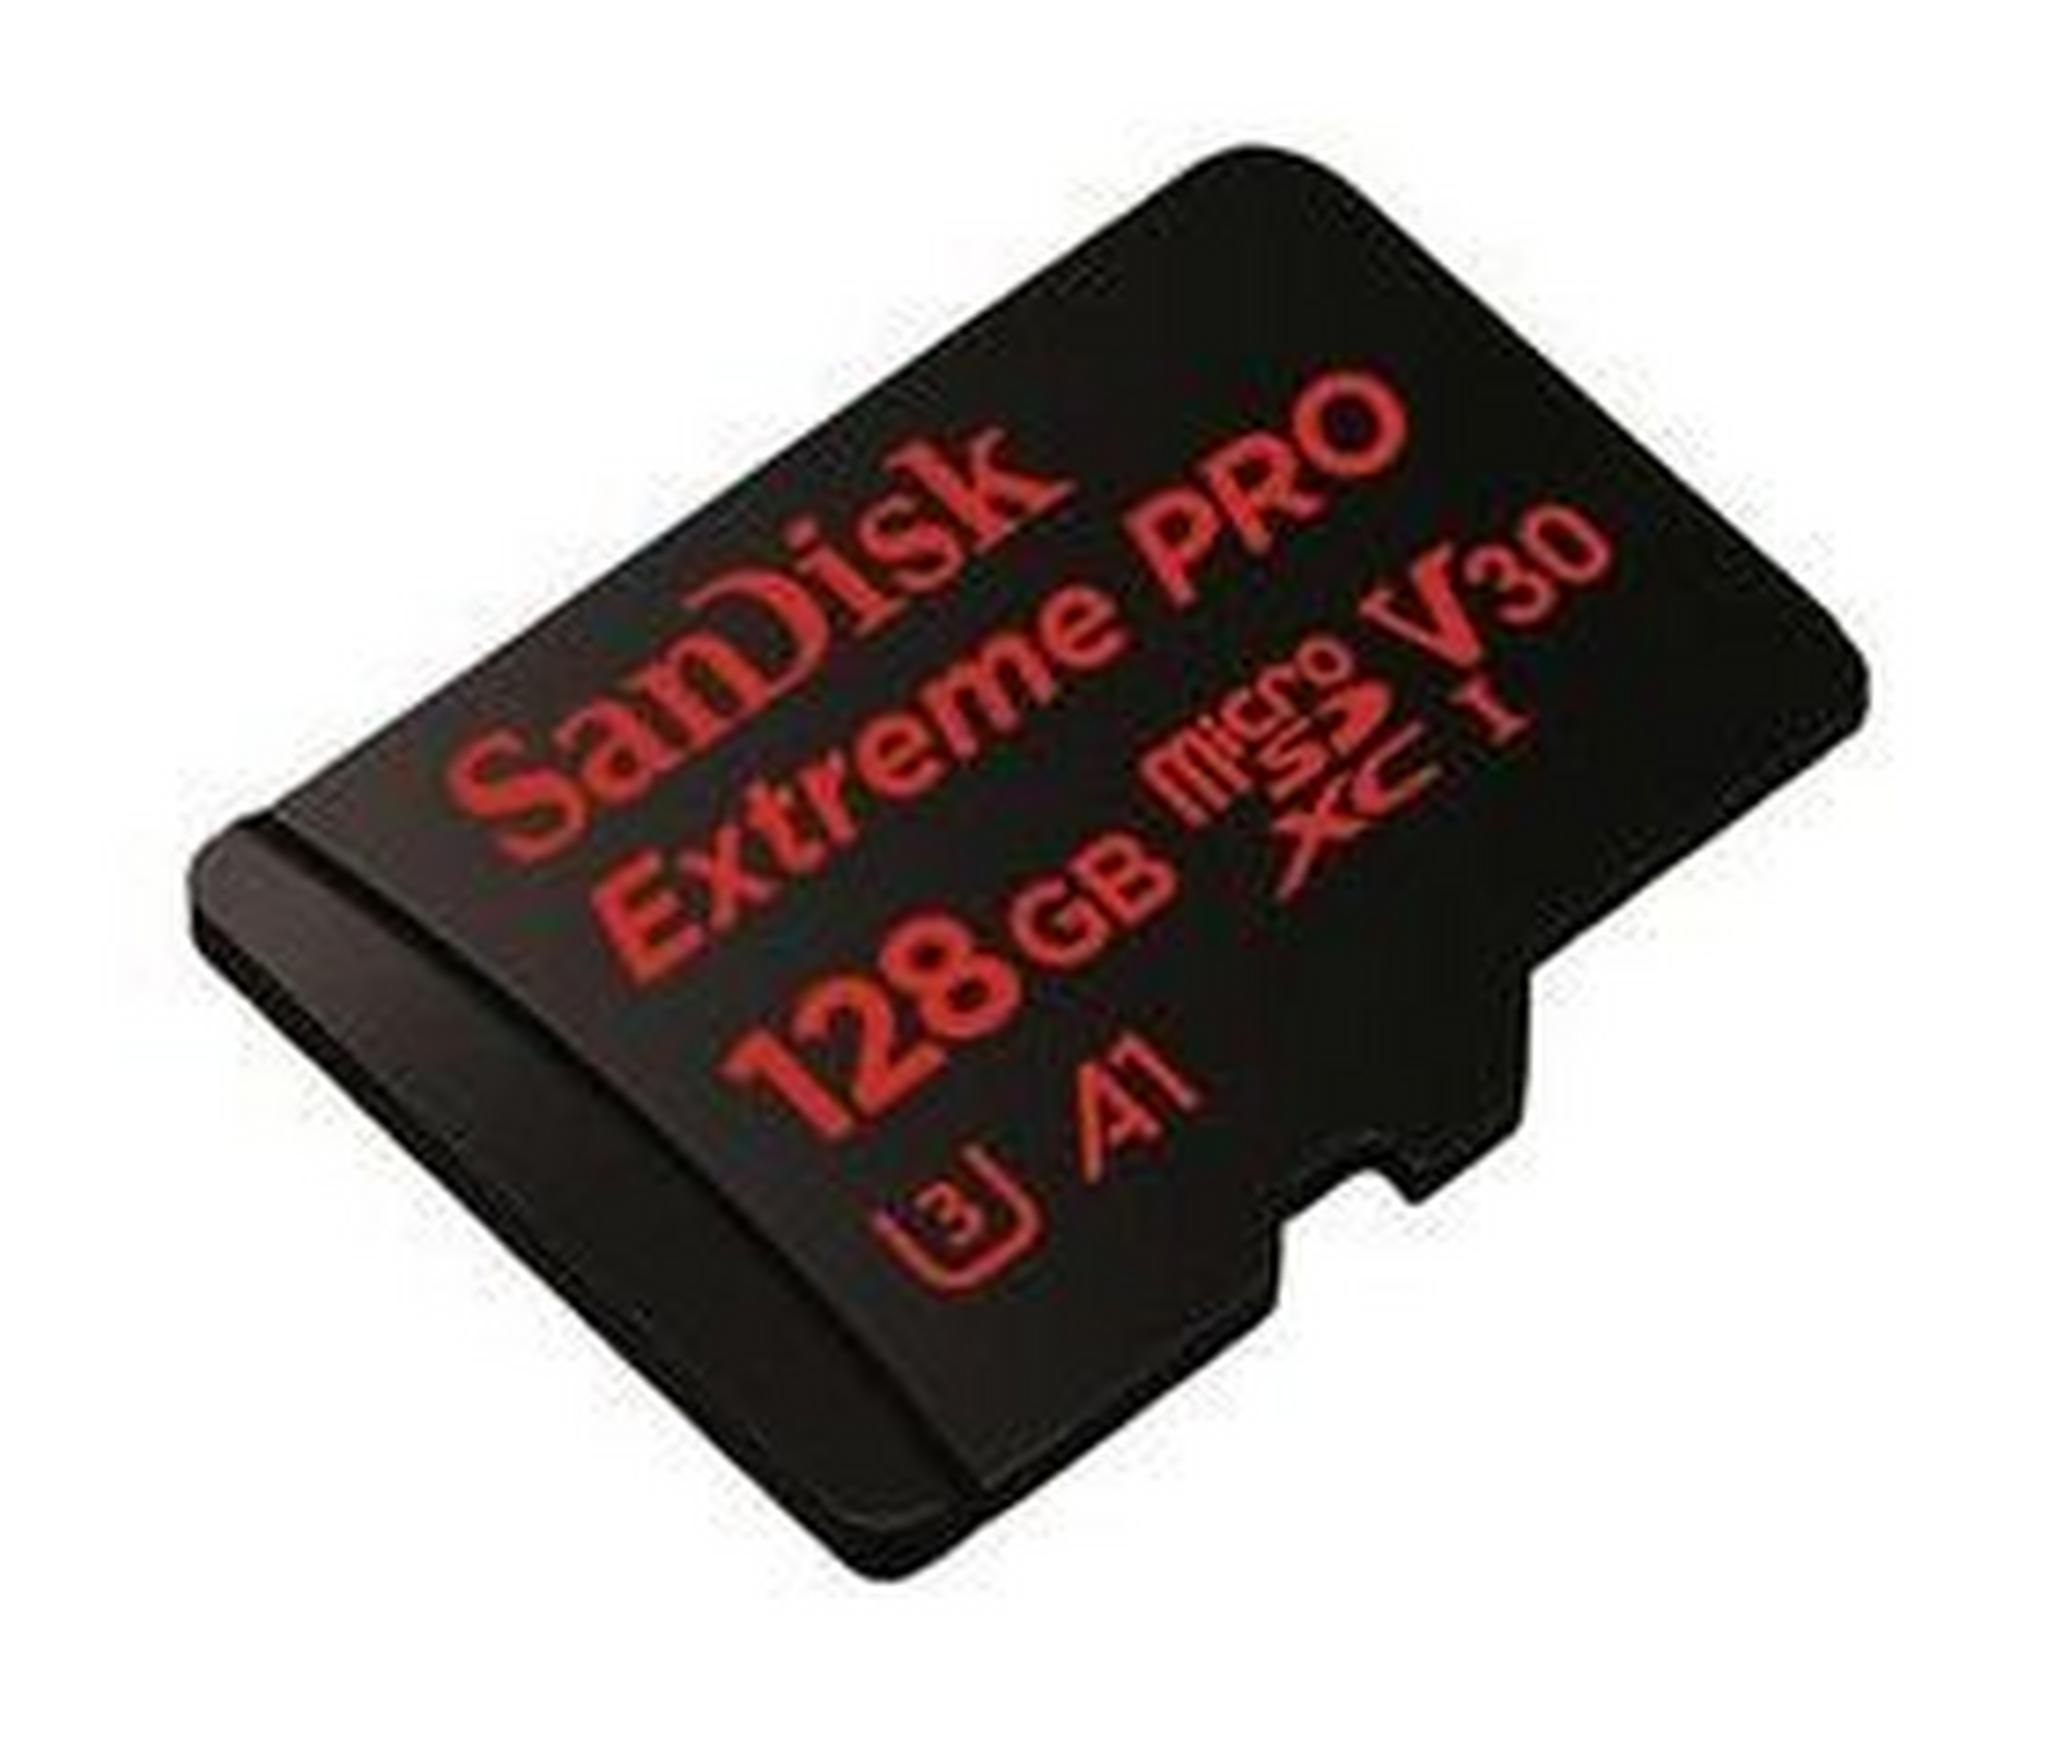 Sandisk Extreme Pro 128GB 4K UHS-I Micro SDXC 95MB/S Memory Card